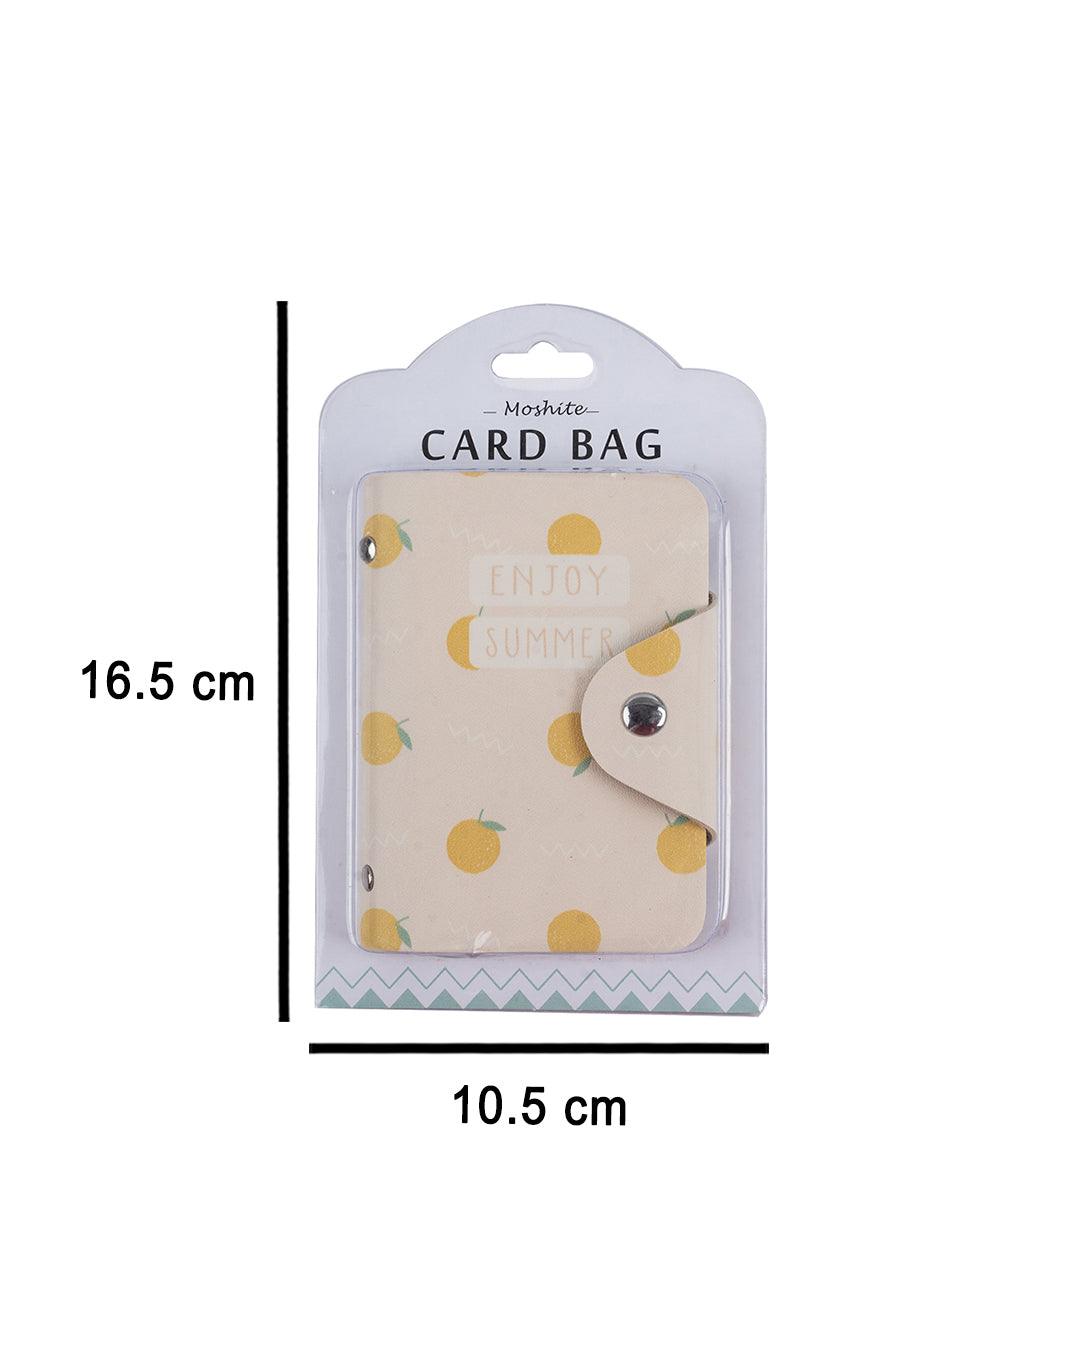 Multi Card Holder, Wallet, Printed, Orange, PU Leather - MARKET 99